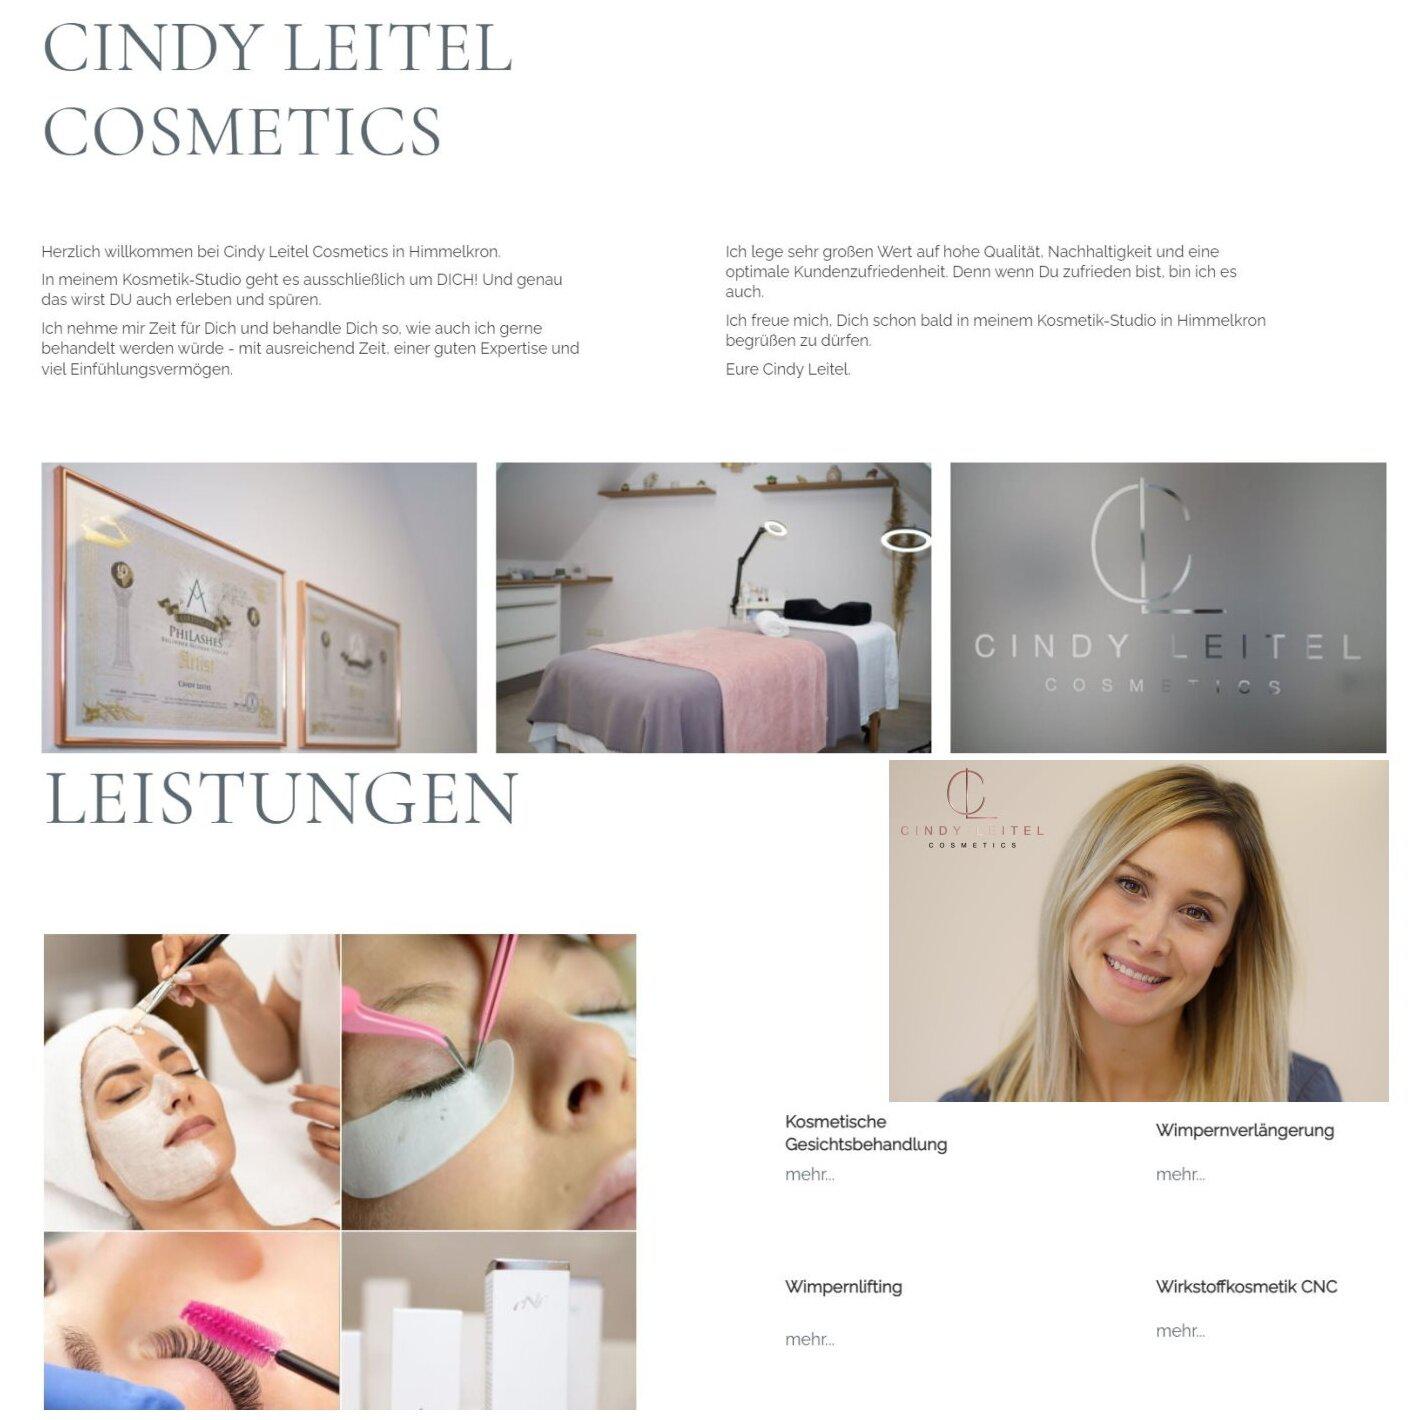 Cindy Leitel Cosmetics, Fichtelgebirgsstraße 12 in Himmelkron